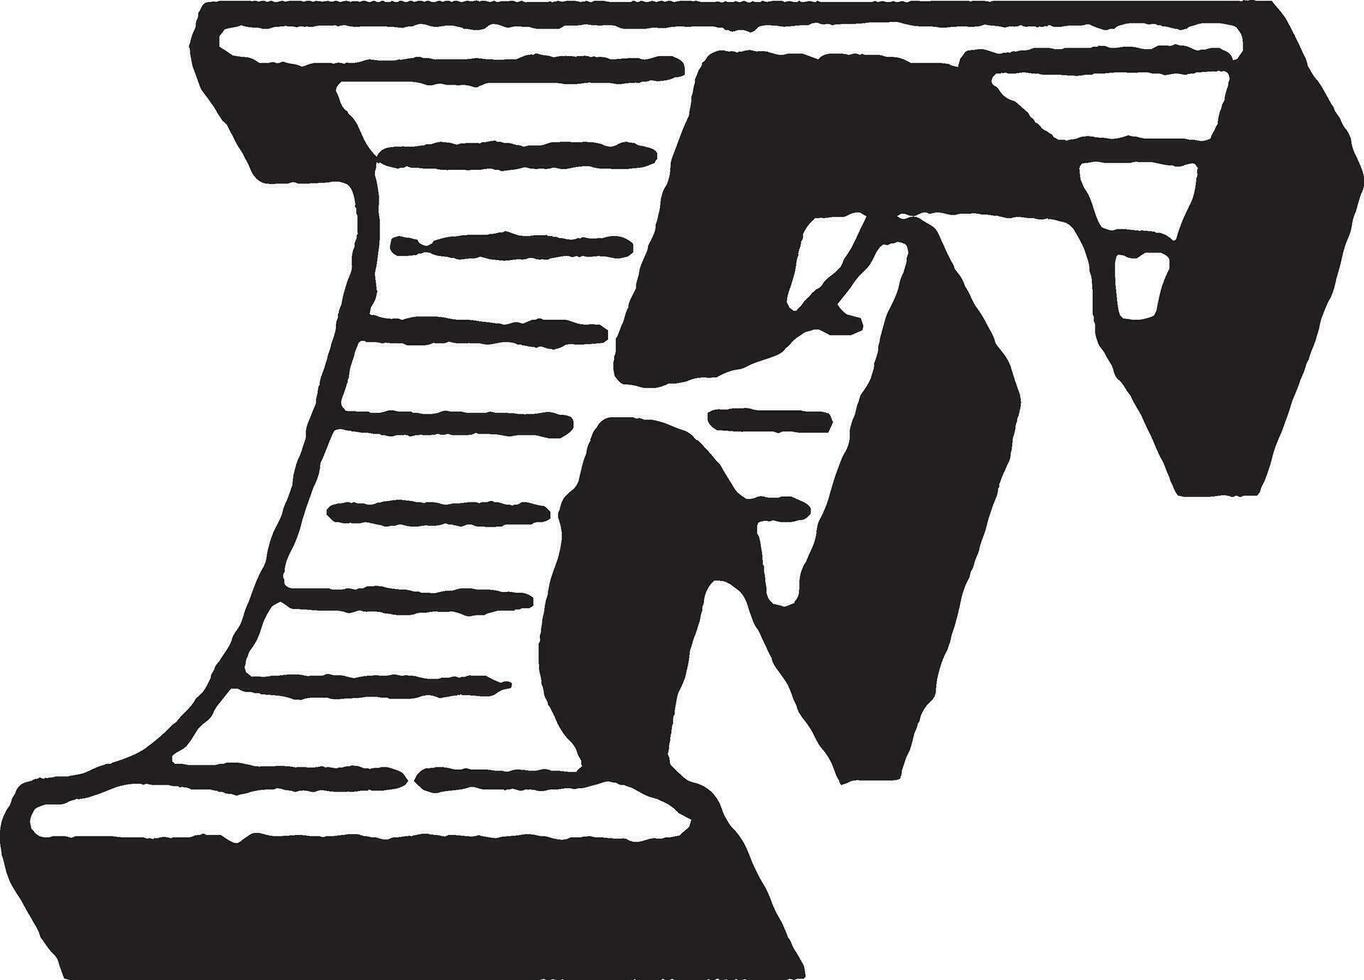 F, Italic initial, vintage illustration vector